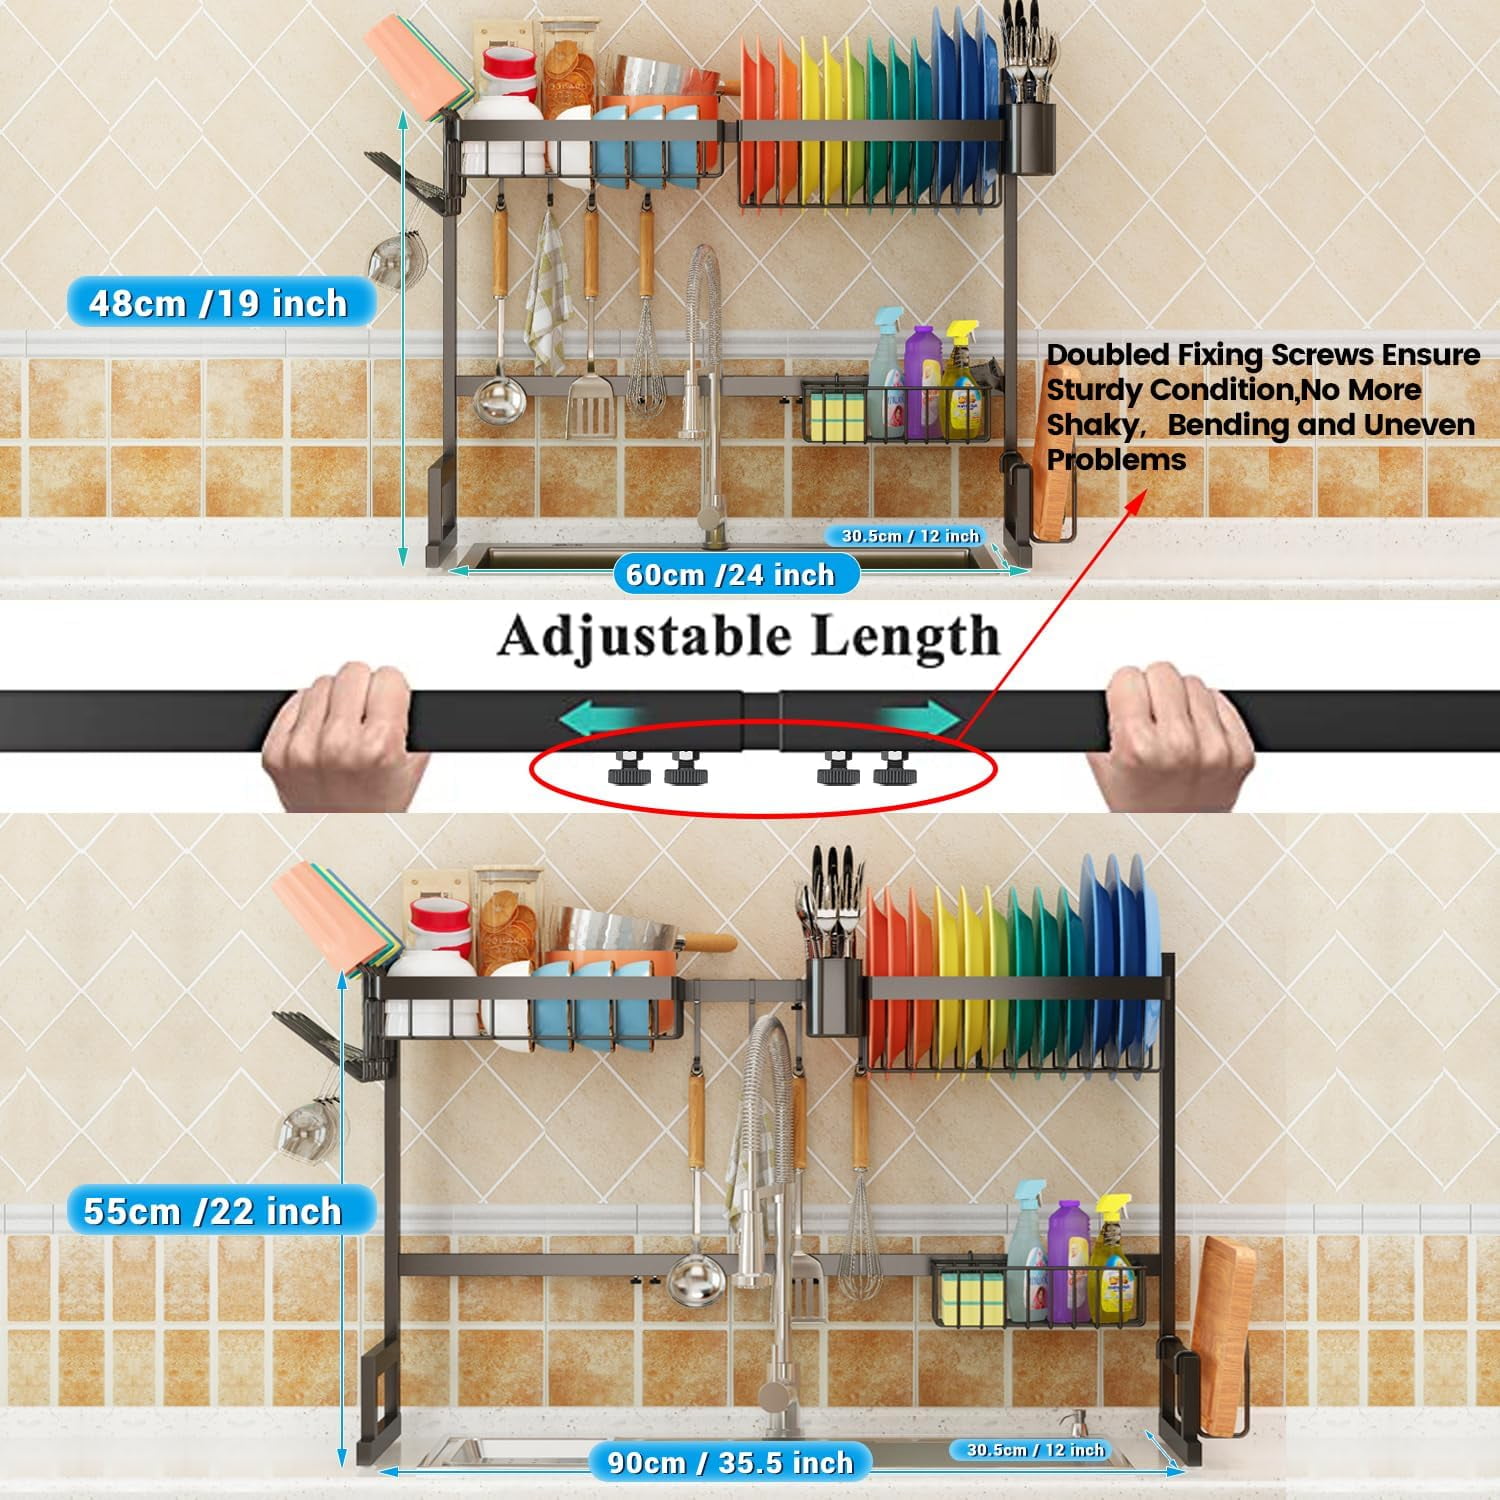 ADBIU Over The Sink (24- 32.5 L) Dish Drying Rack (Expandable